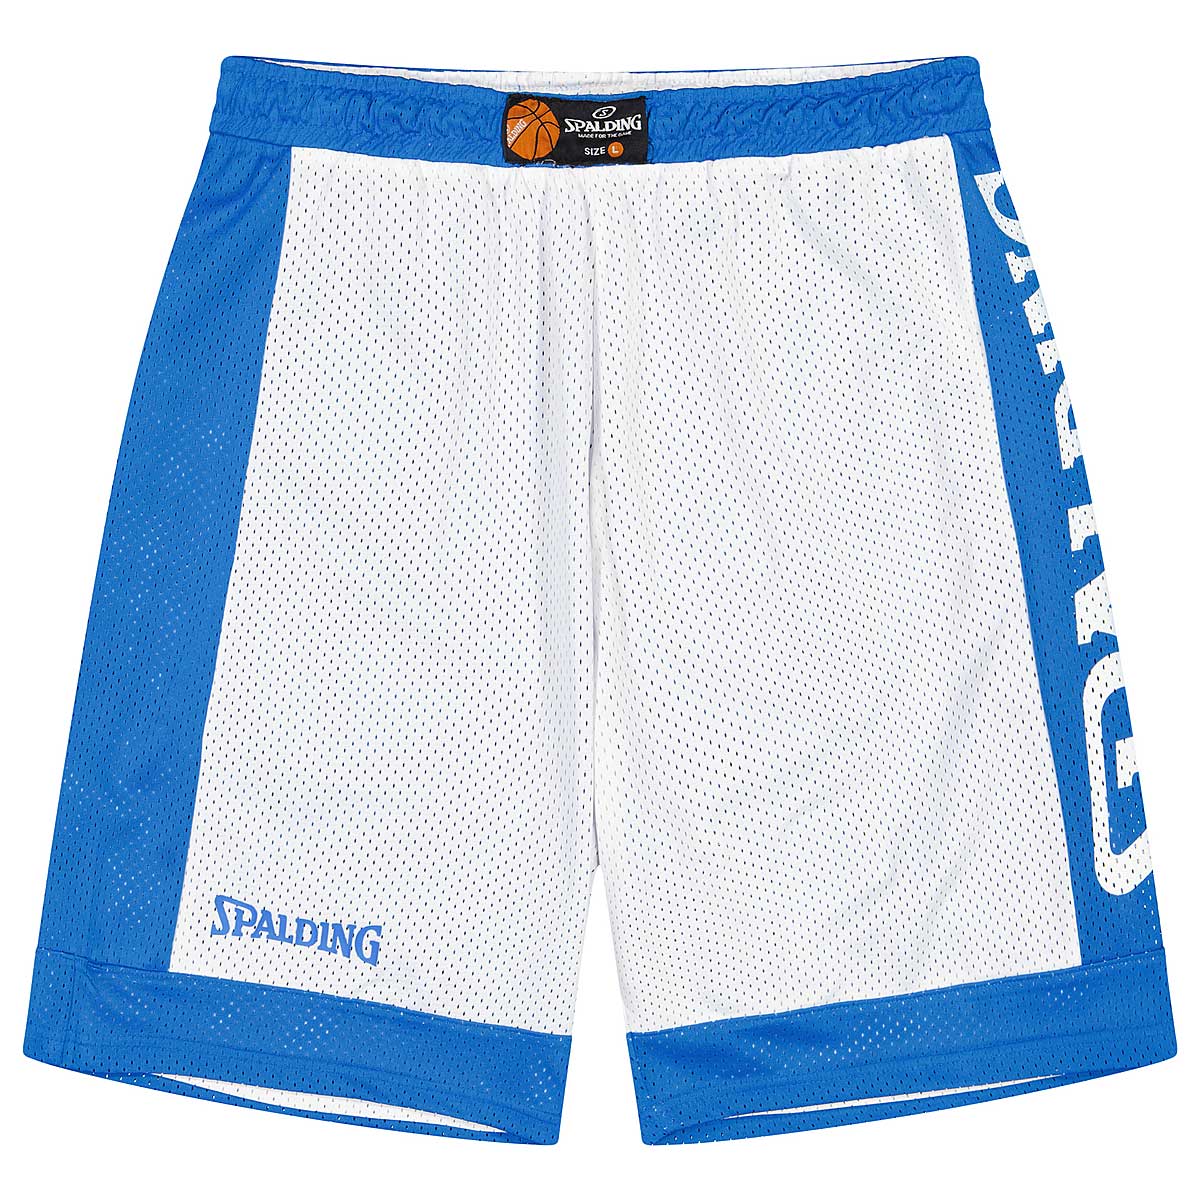 Spalding Reversible Shorts, Royal Blue